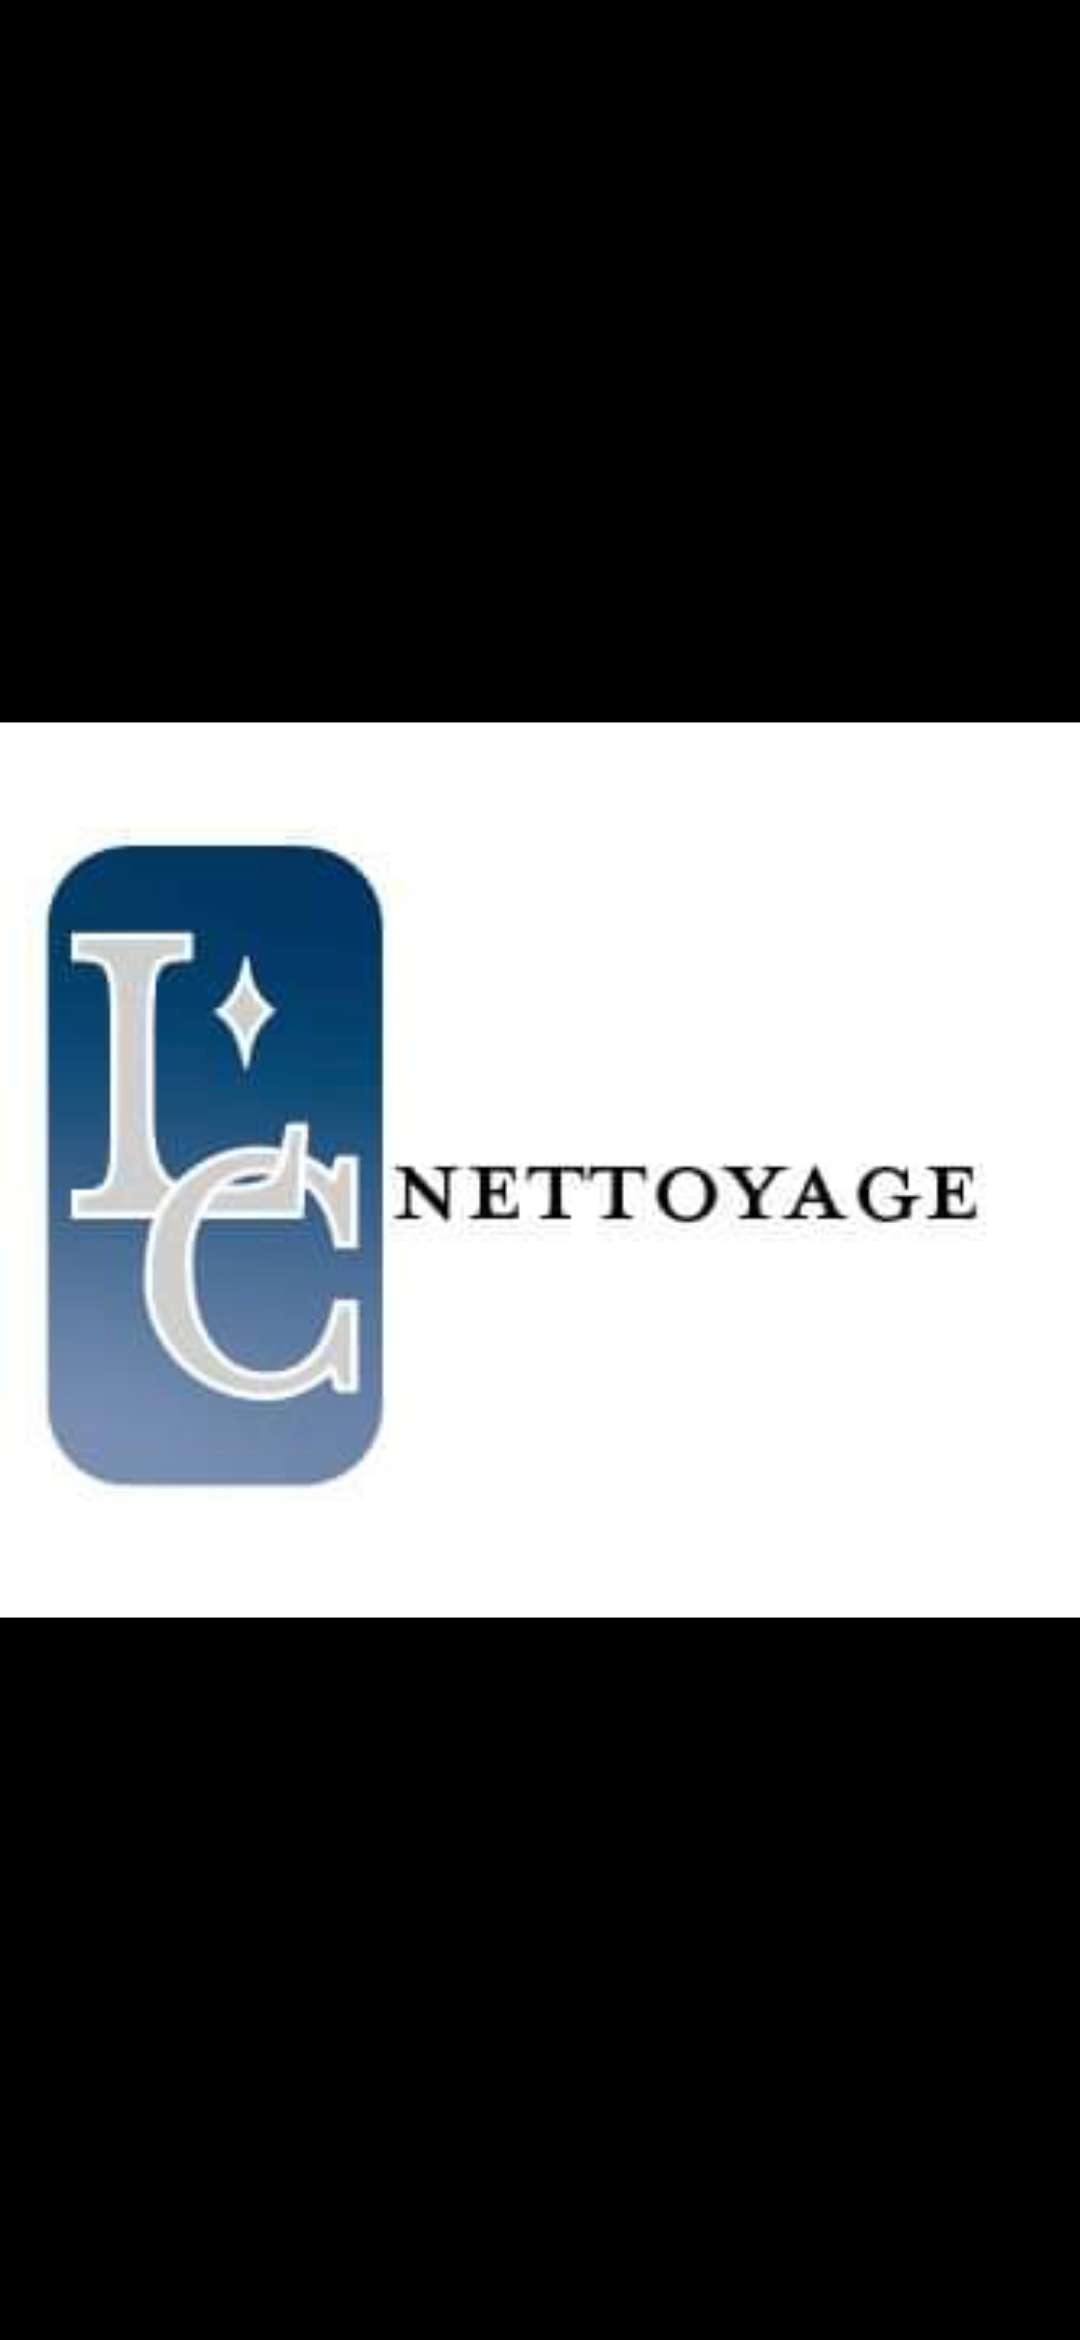 Logo LC Nettoyage